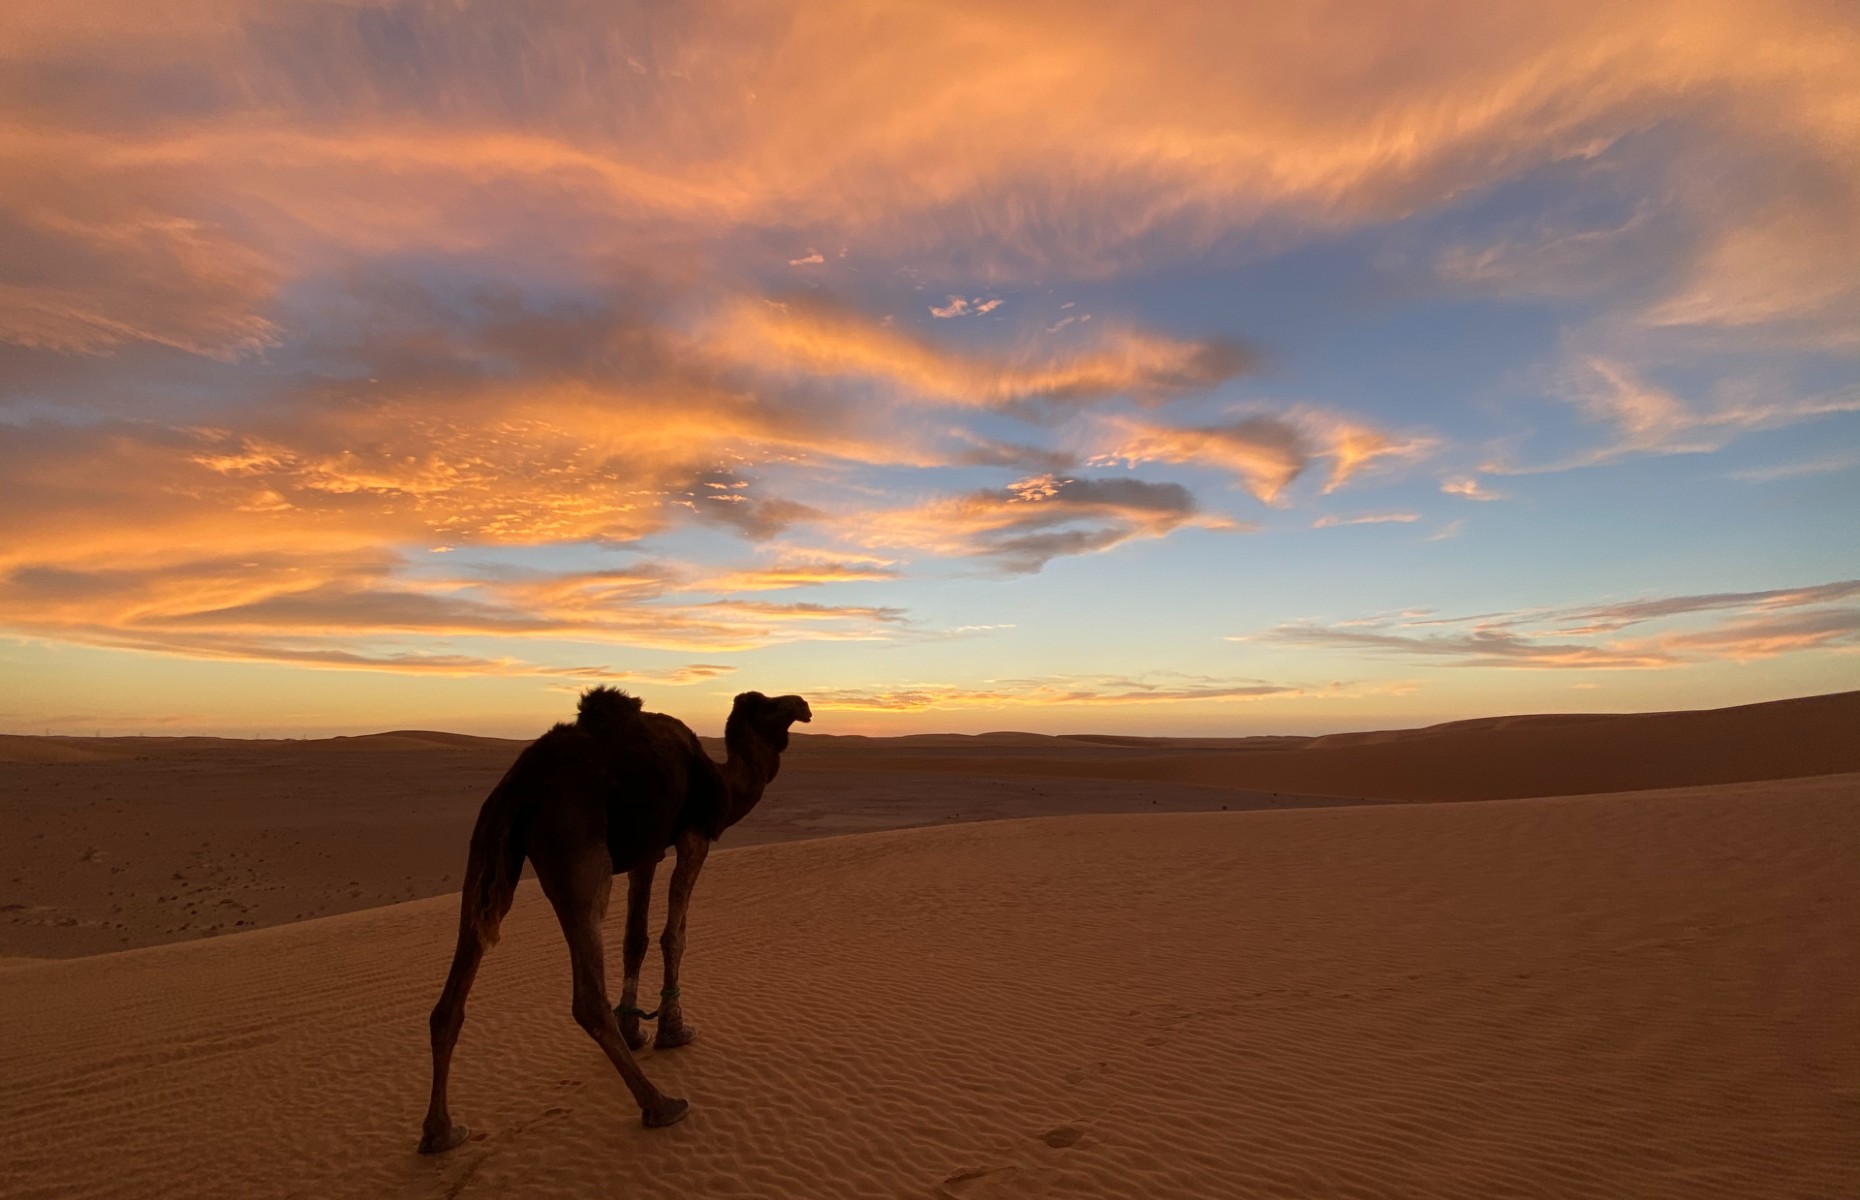 A camel walking through the desert (Image courtesy Alice Morrison)